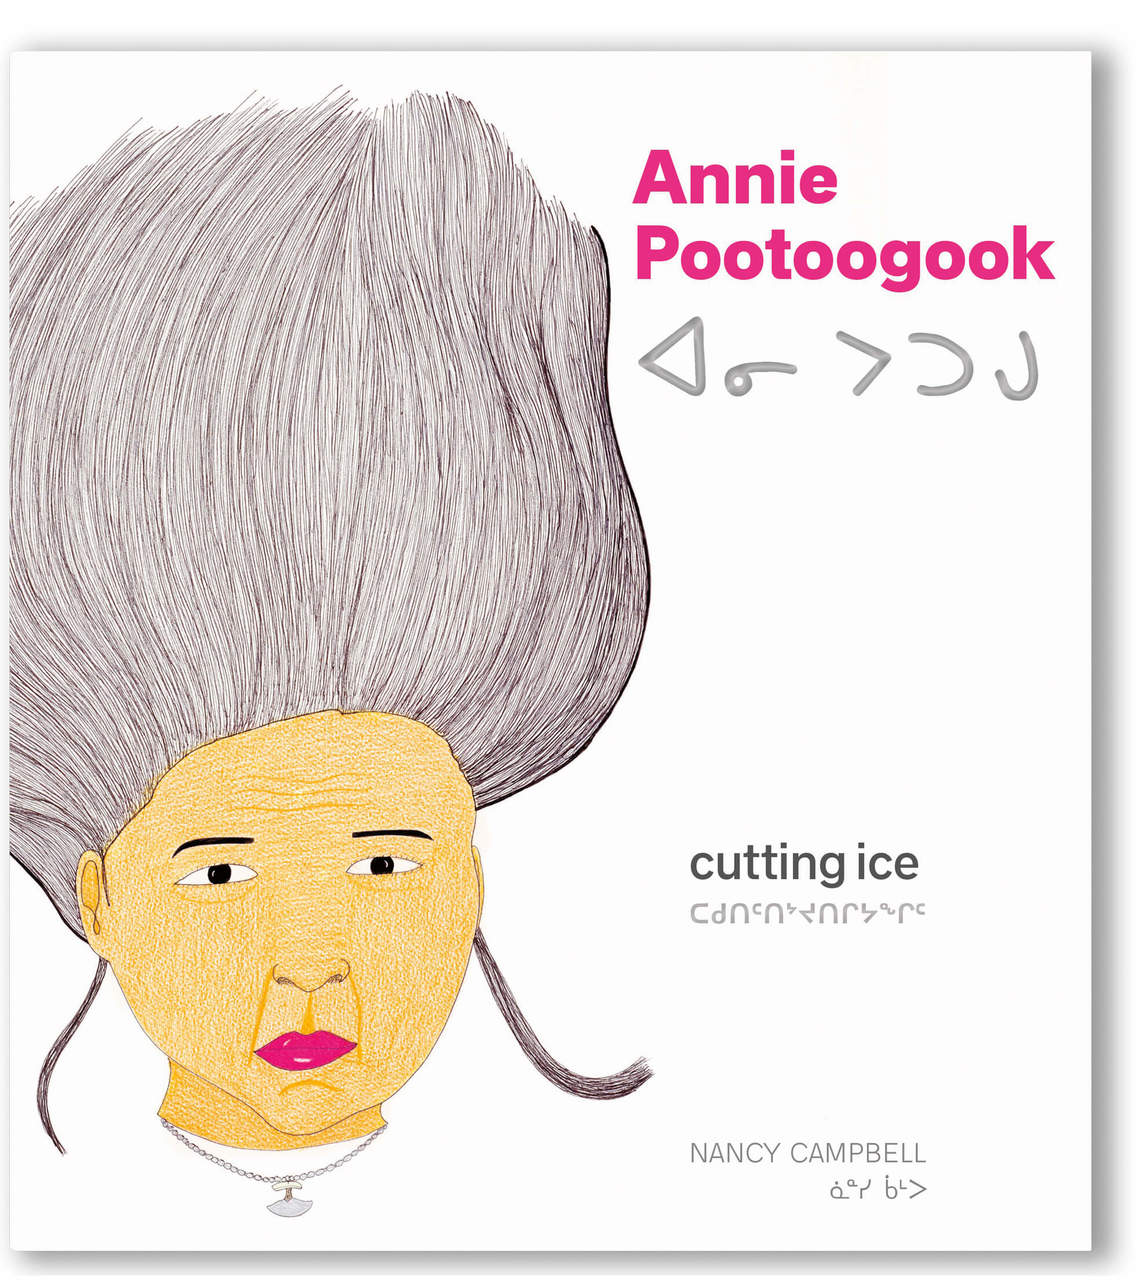 Couverture de Annie Pootoogook: cutting ice = Ini Putugu: tukisitittisimavuq takusinnggittunik, 2017